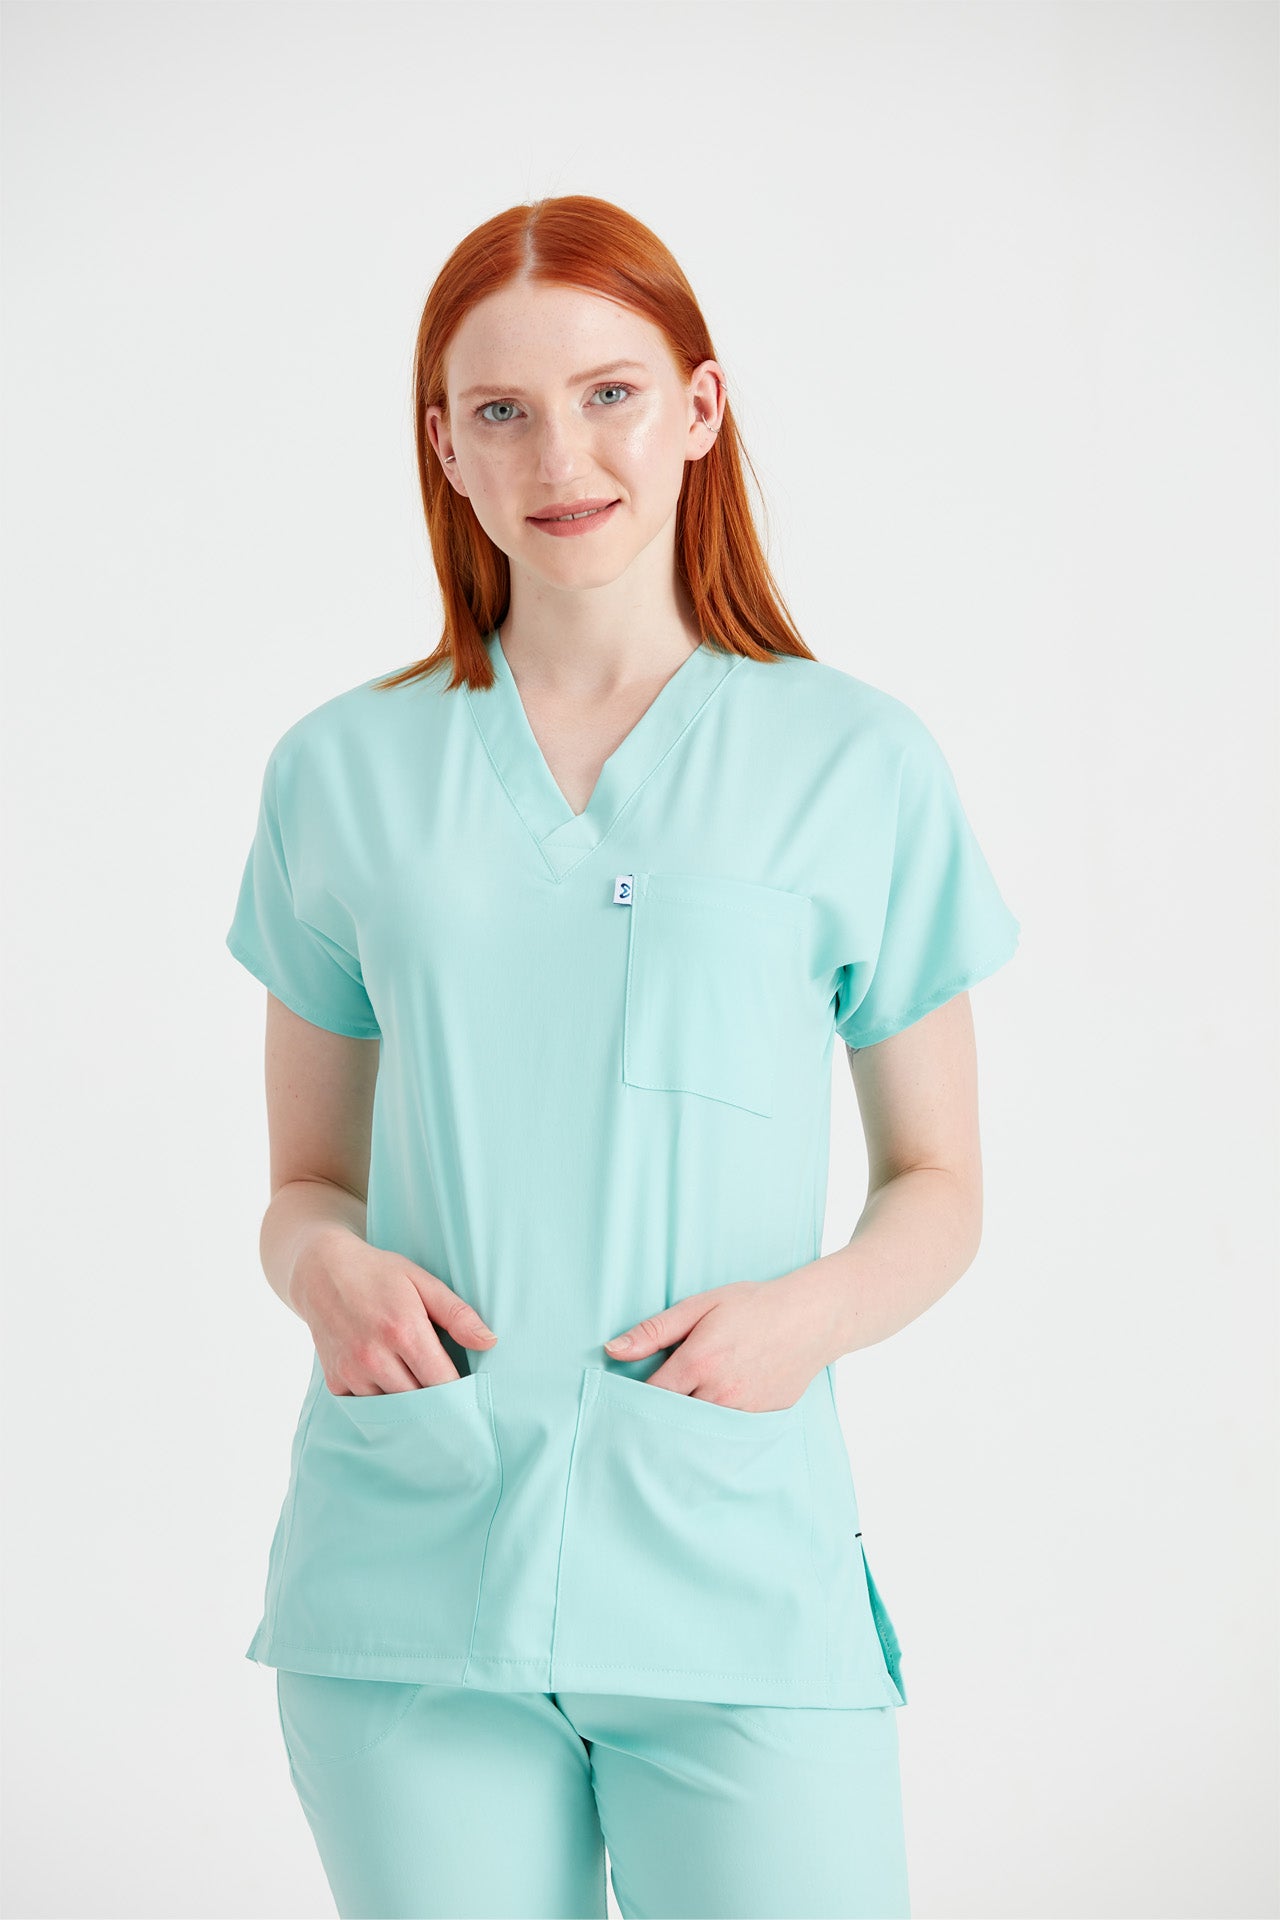 Asistenta medicala imbracata in costum din elastan verde menta Mint, vedere din fata